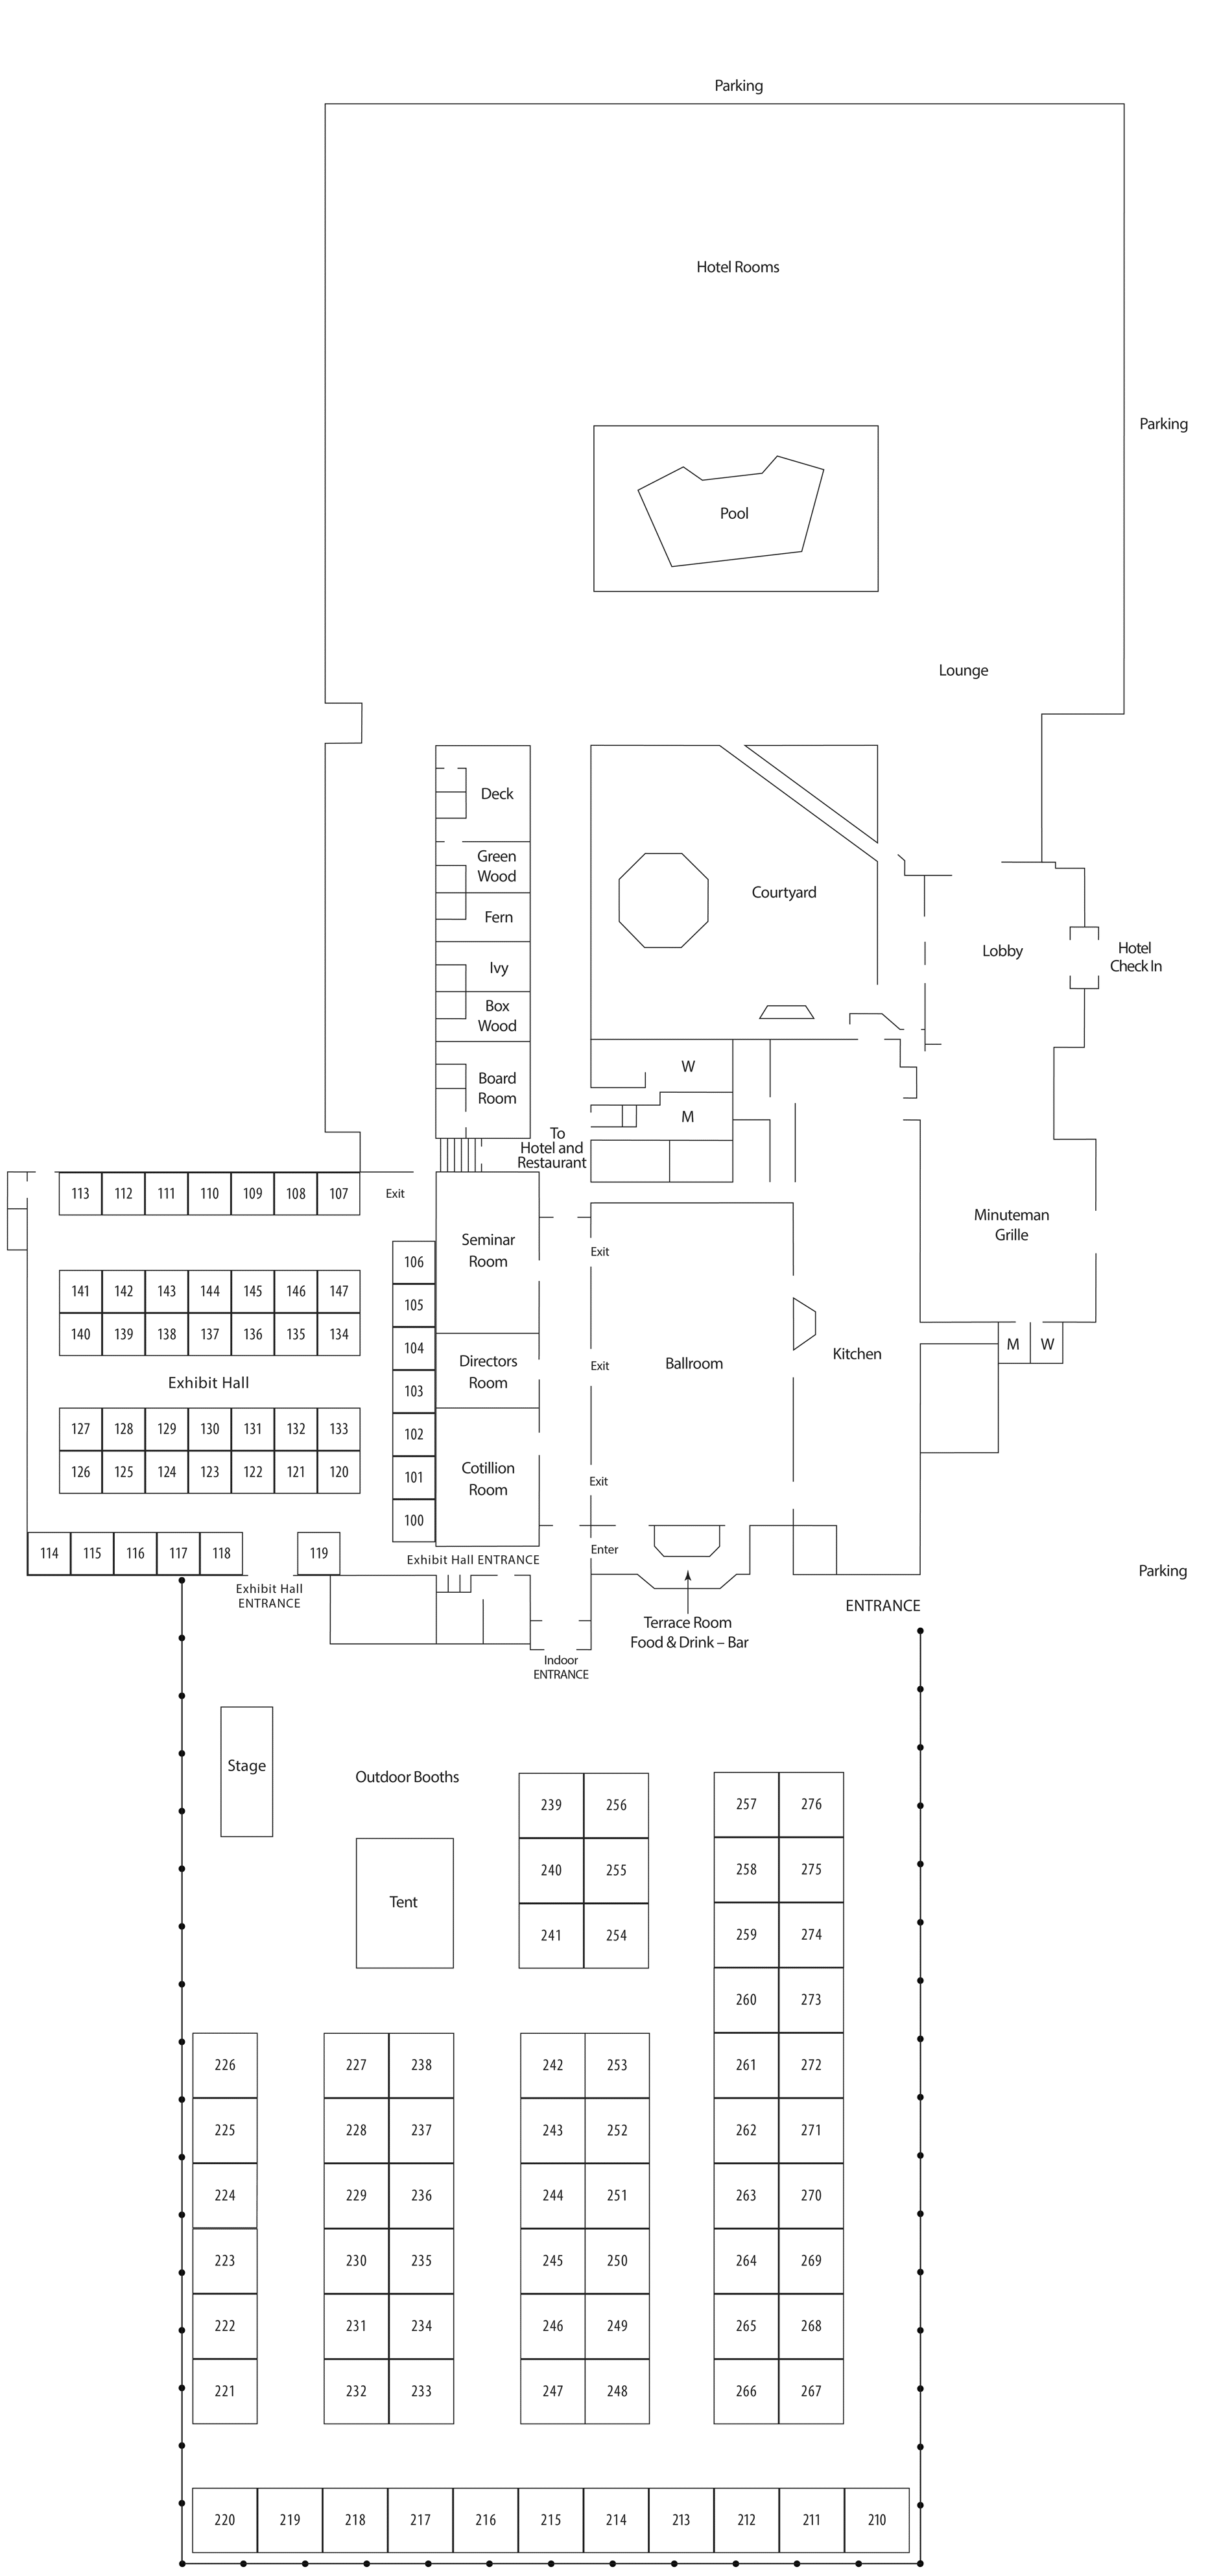 Boxboro Regency Hotel - HighLifeStyle Show - Venue Map